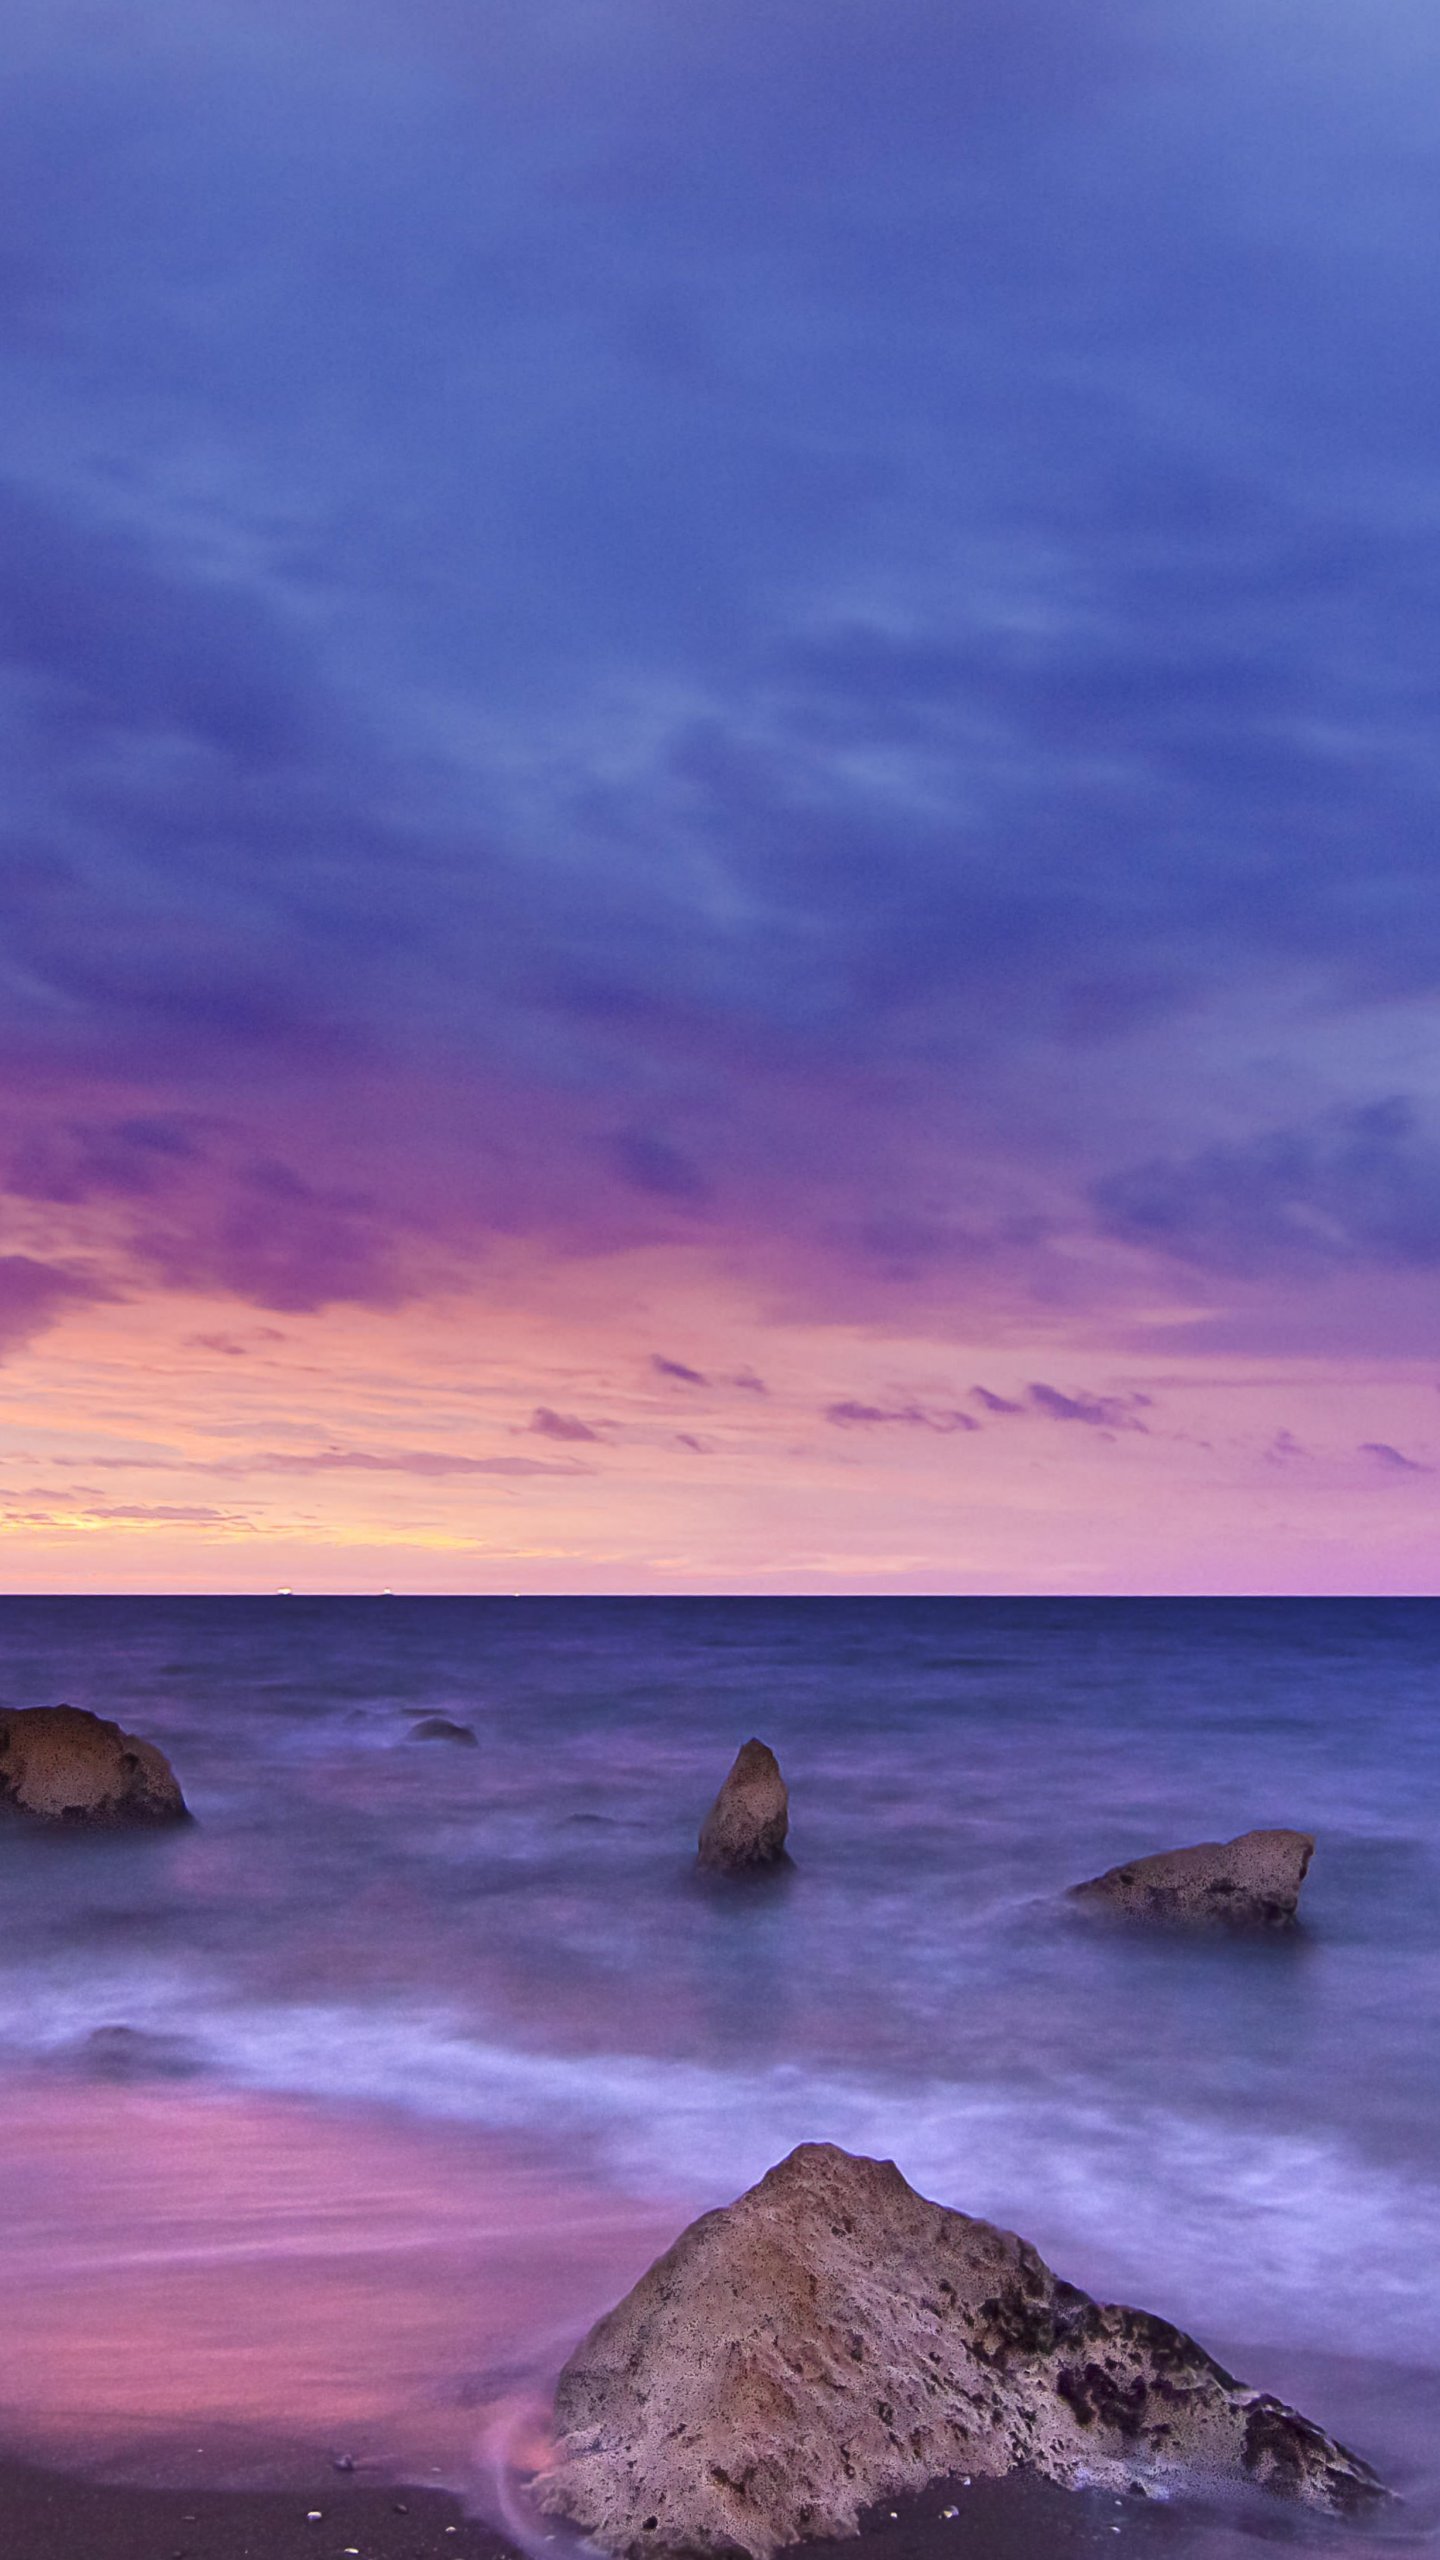 Ocean Sunset Wallpaper Iphone Android Desktop Backgrounds